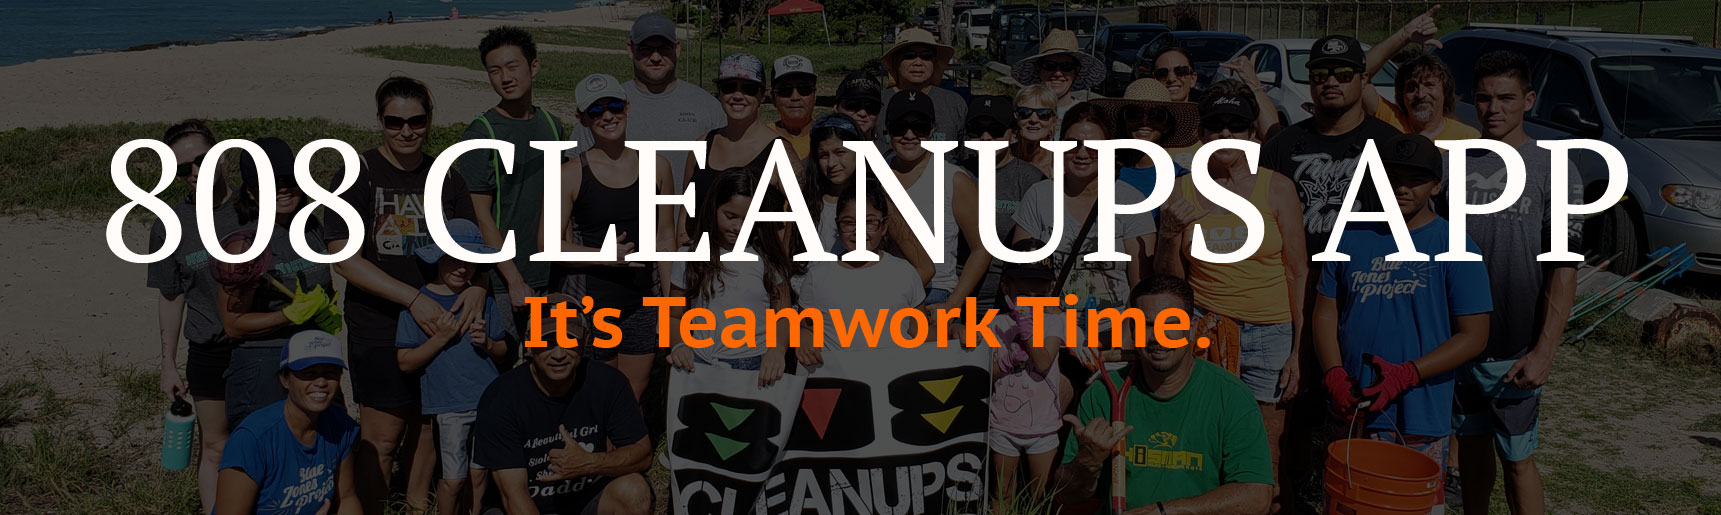 808 Cleanups app, mobile app, it's teamwork time